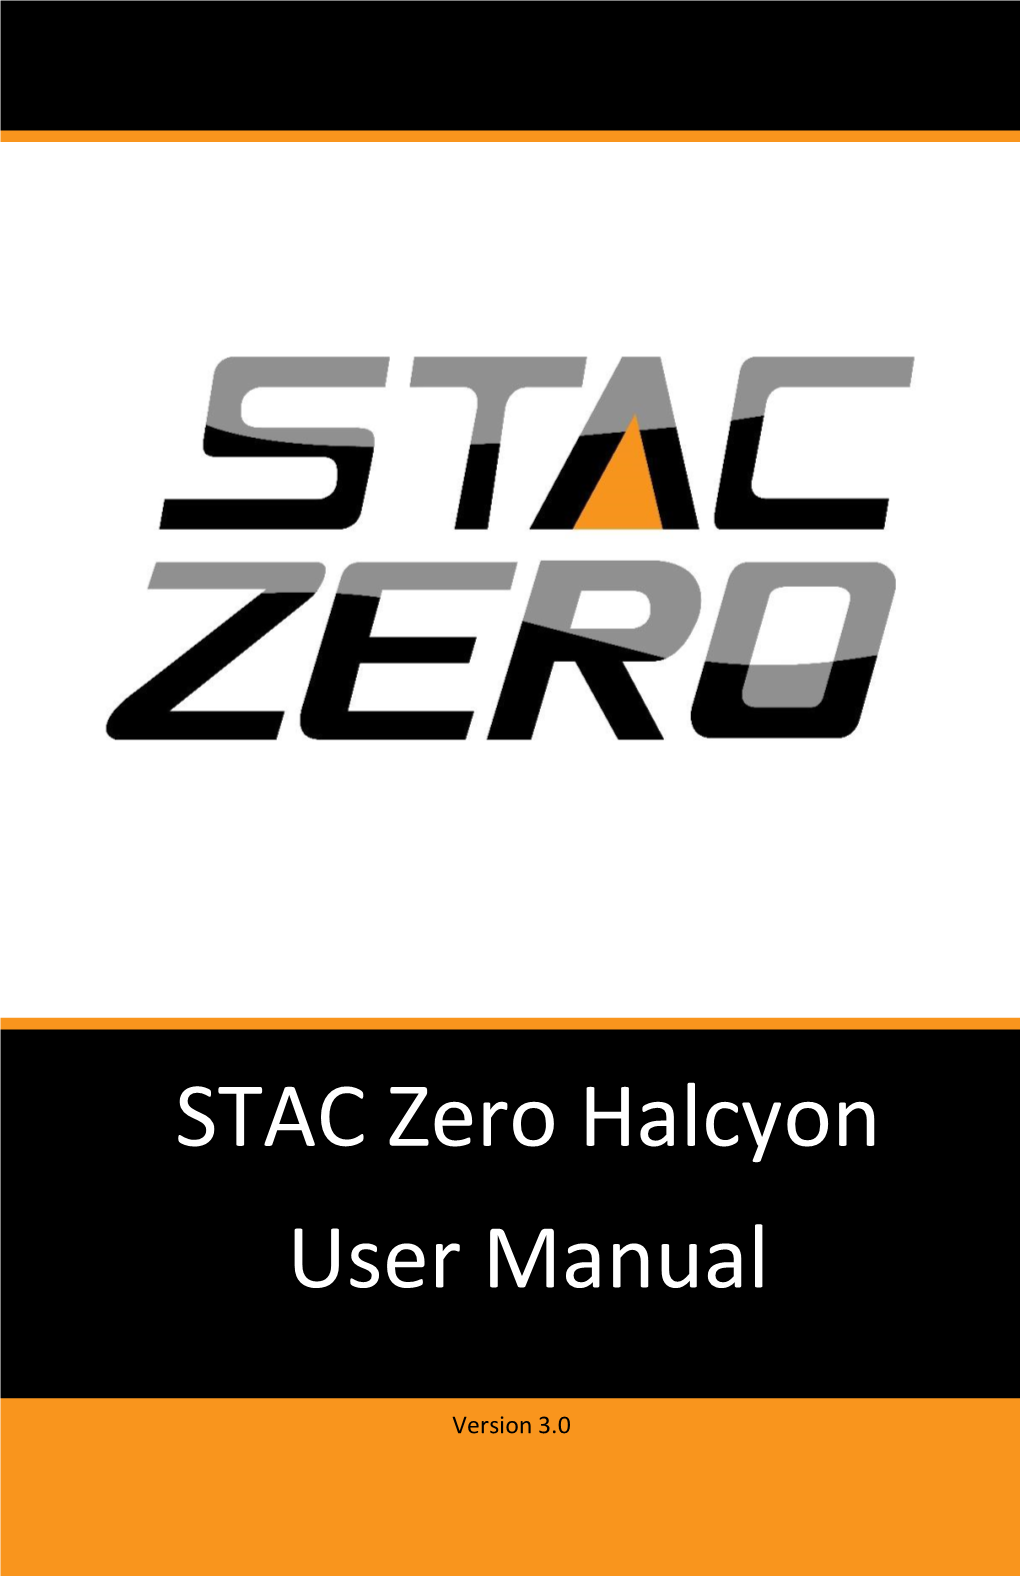 STAC Zero Halcyon User Manual